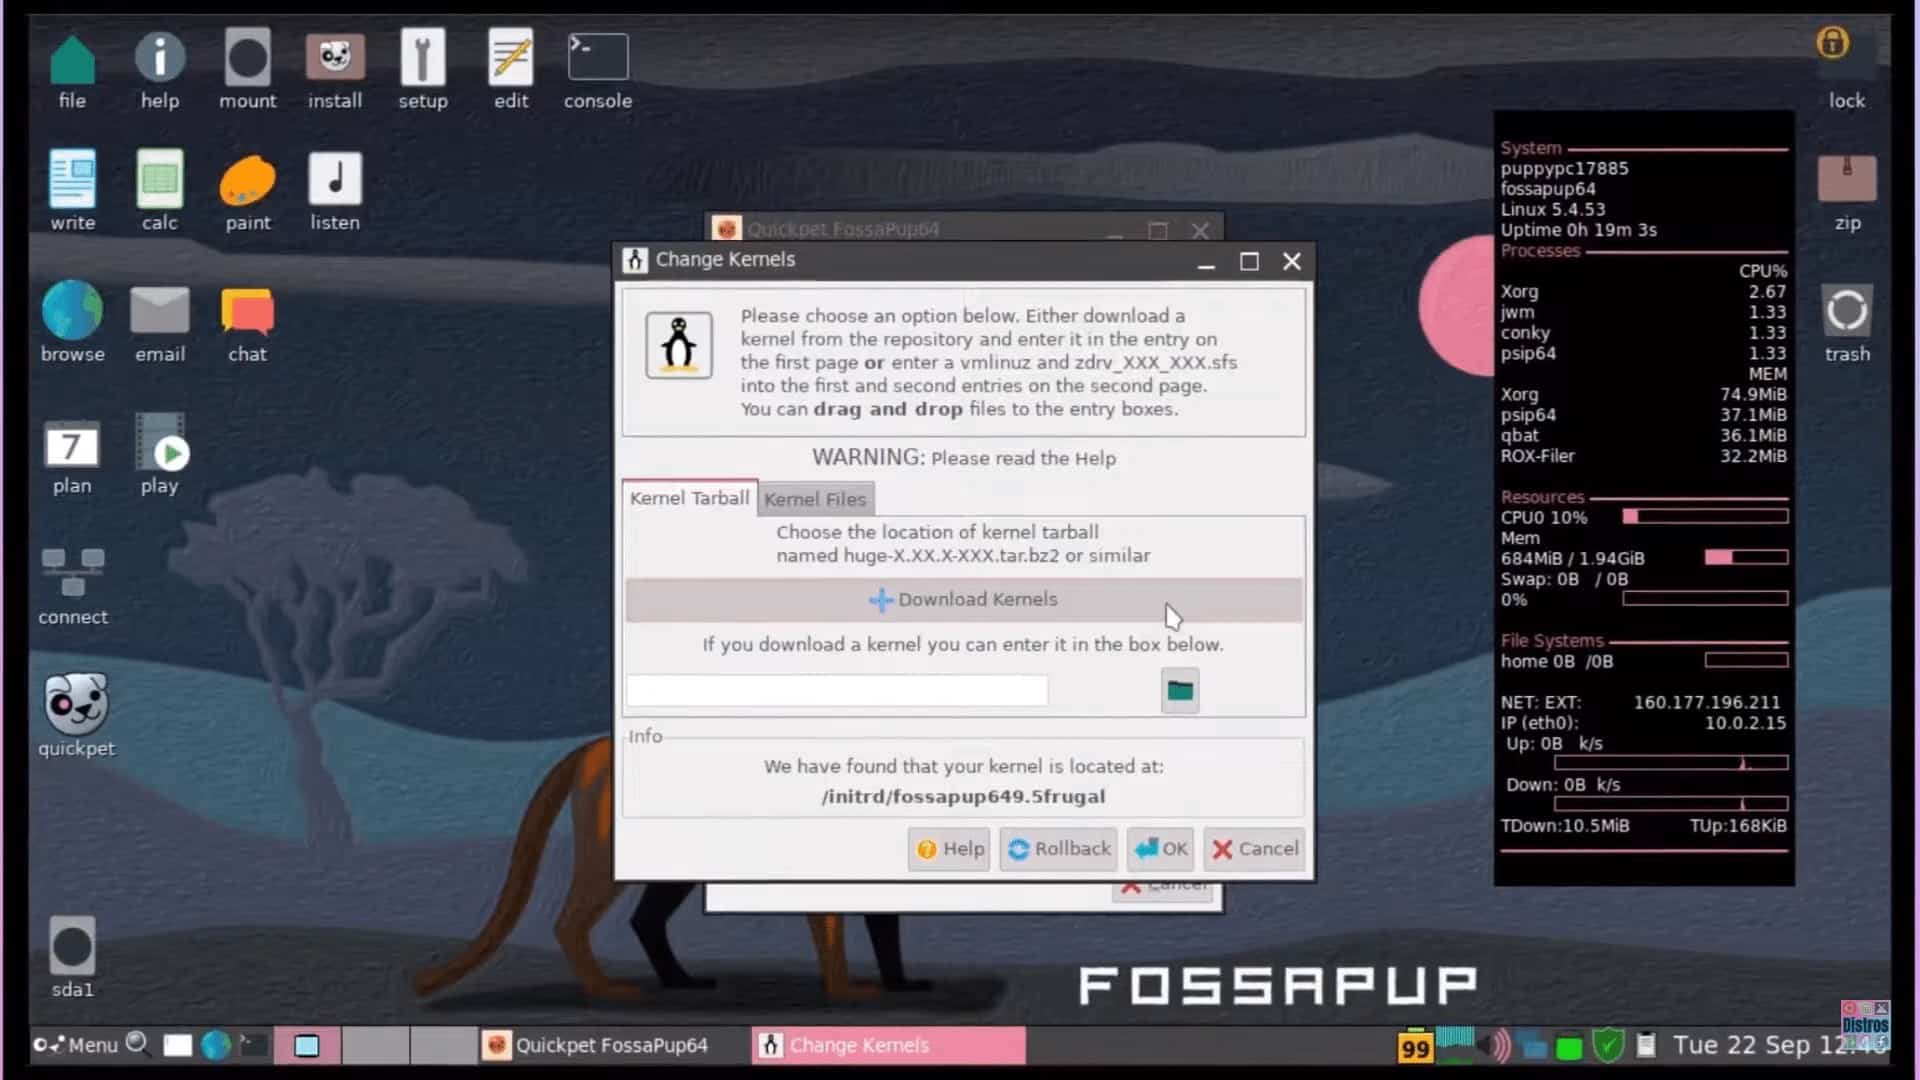 Lançada distribuição Puppy Linux 9.5 FossaPup baseada no Ubuntu 20.04 LTS